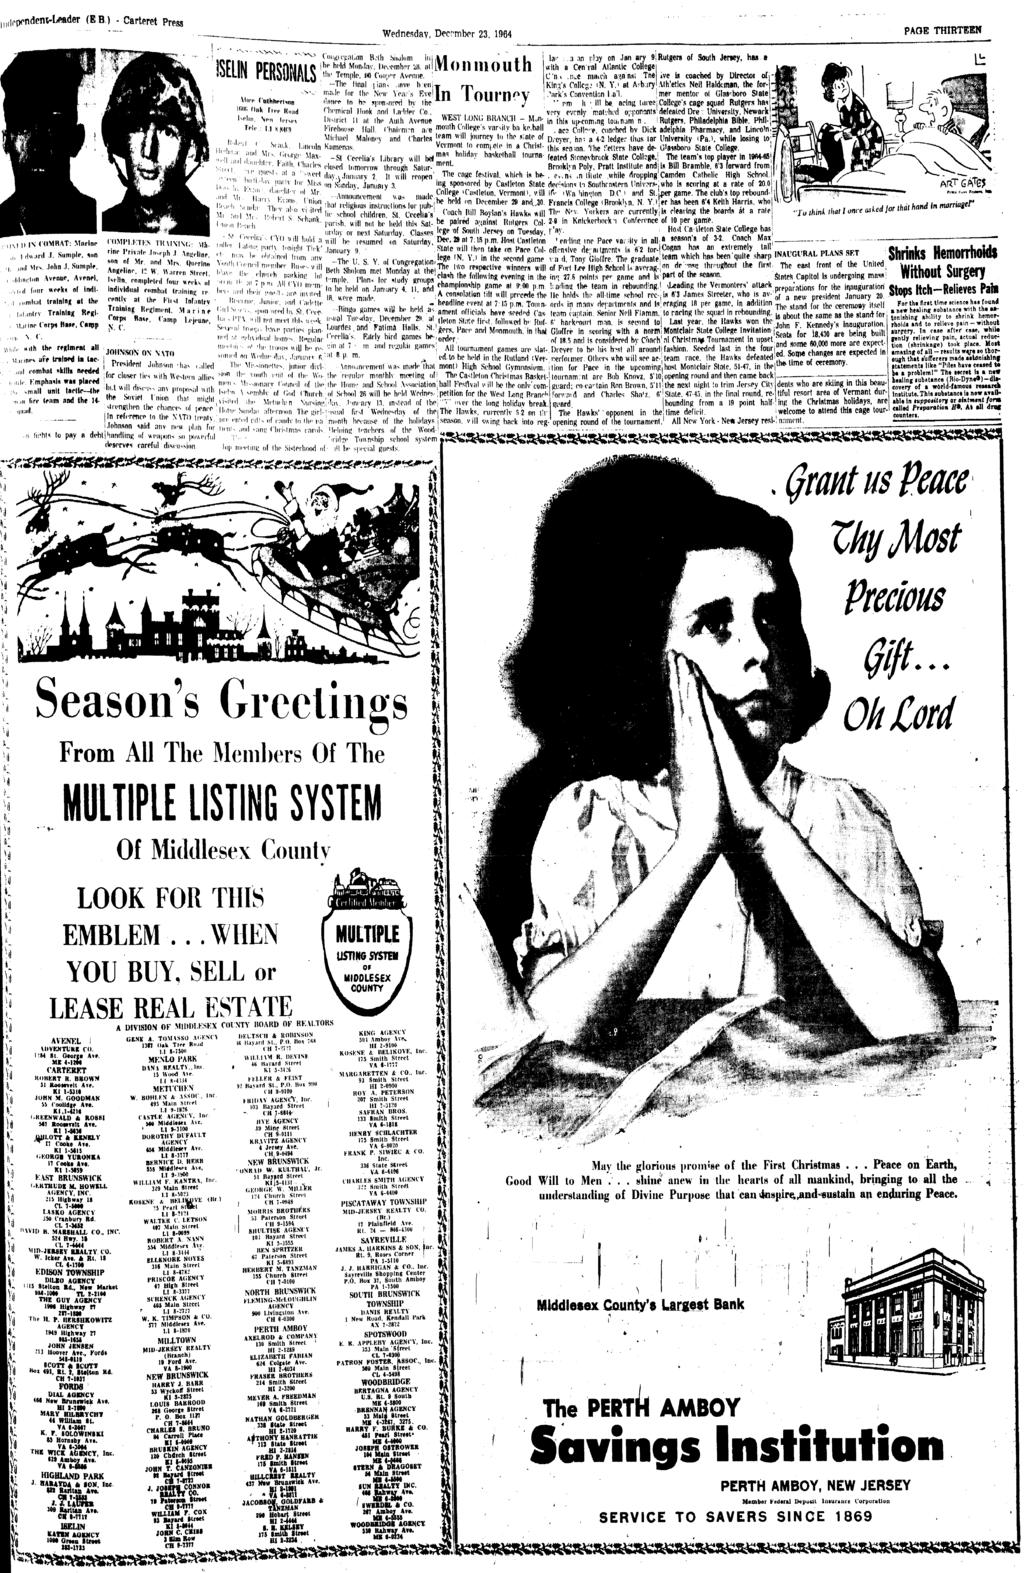 llf ppondcm-lftader (EB.) - Carteret Press Wednesday, December 23, 1964 PAQE THRTEEN,1 \ COMBAT: Mnrlnr, «;rl. Sun >lr. on ml Mrs..nln J. Slmplf, n'tn Avenue.